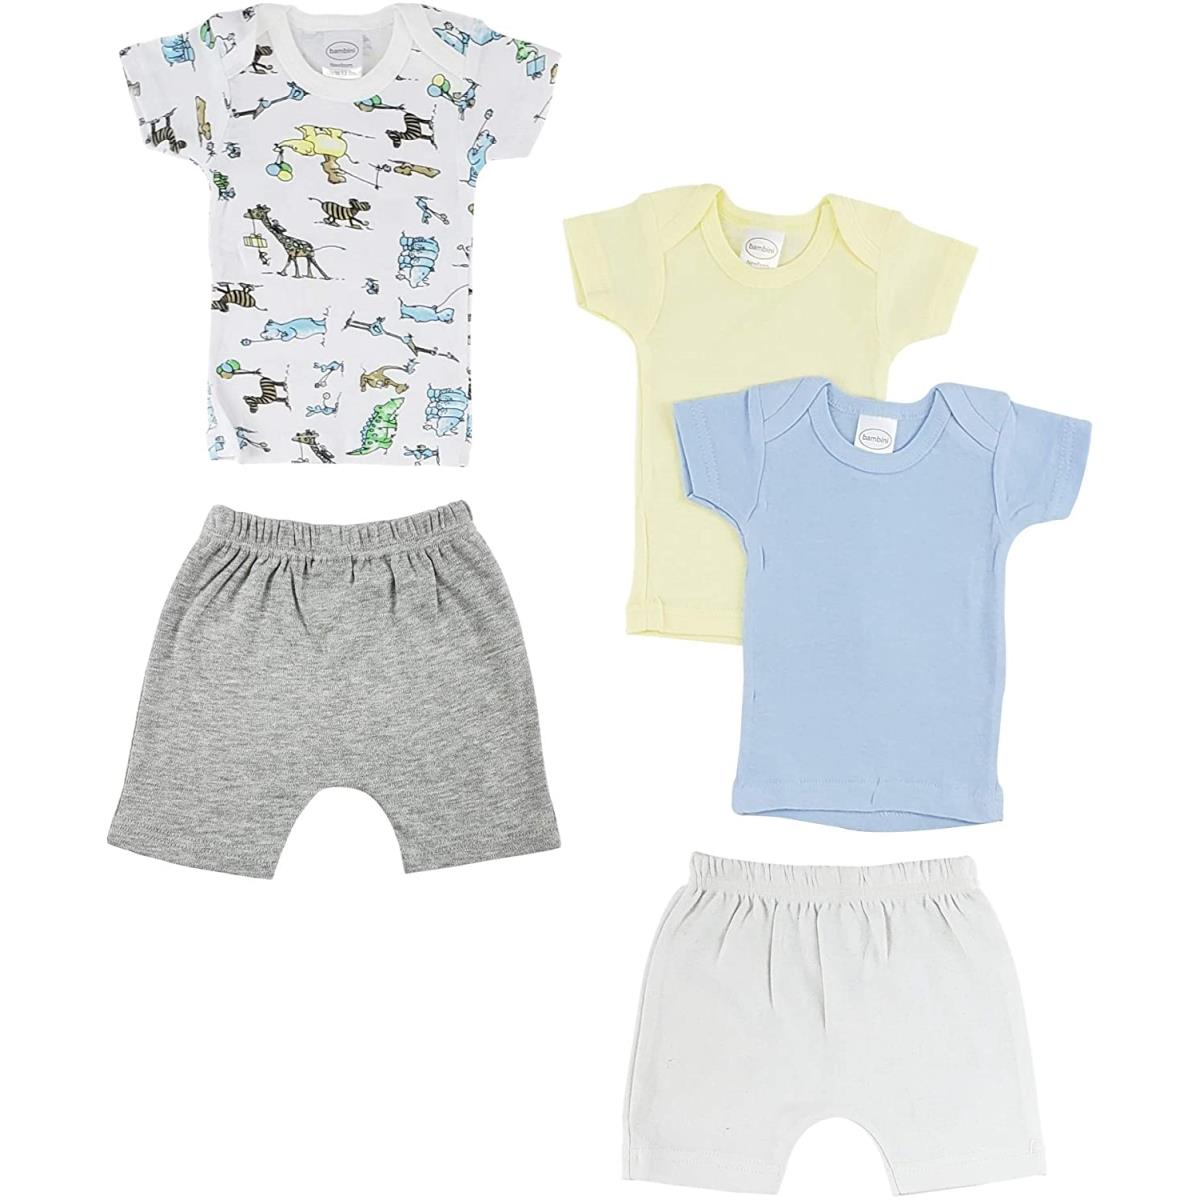 CS-0337S Infant Girls T-Shirts & Shorts, White & Grey - Small - Pack of 5 -  Bambini, CS_0337S